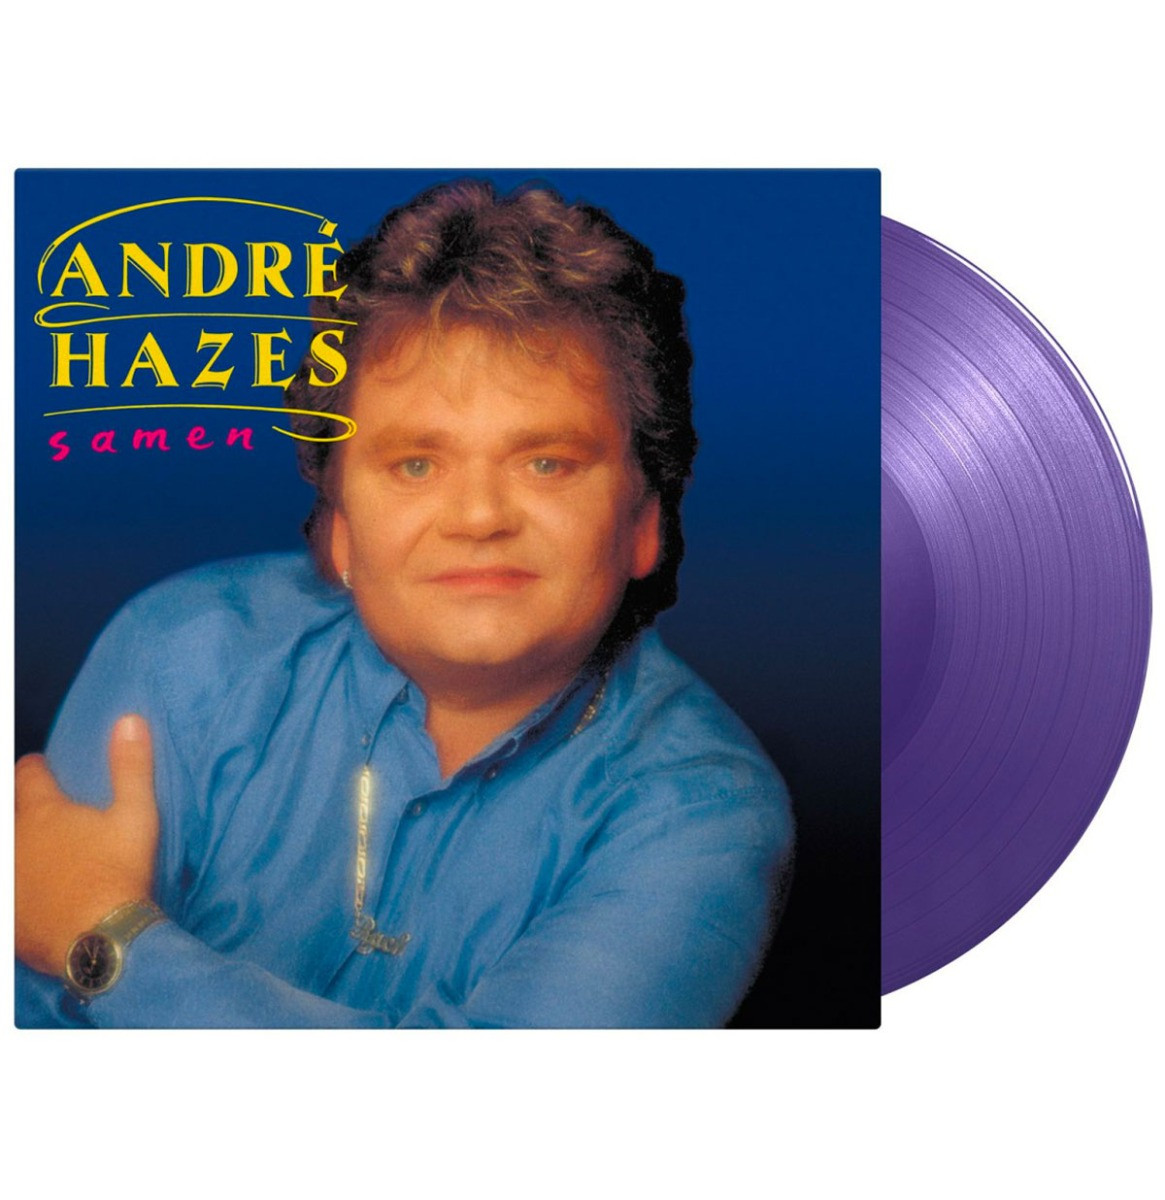 Andre Hazes - Samen LP Limited Edition